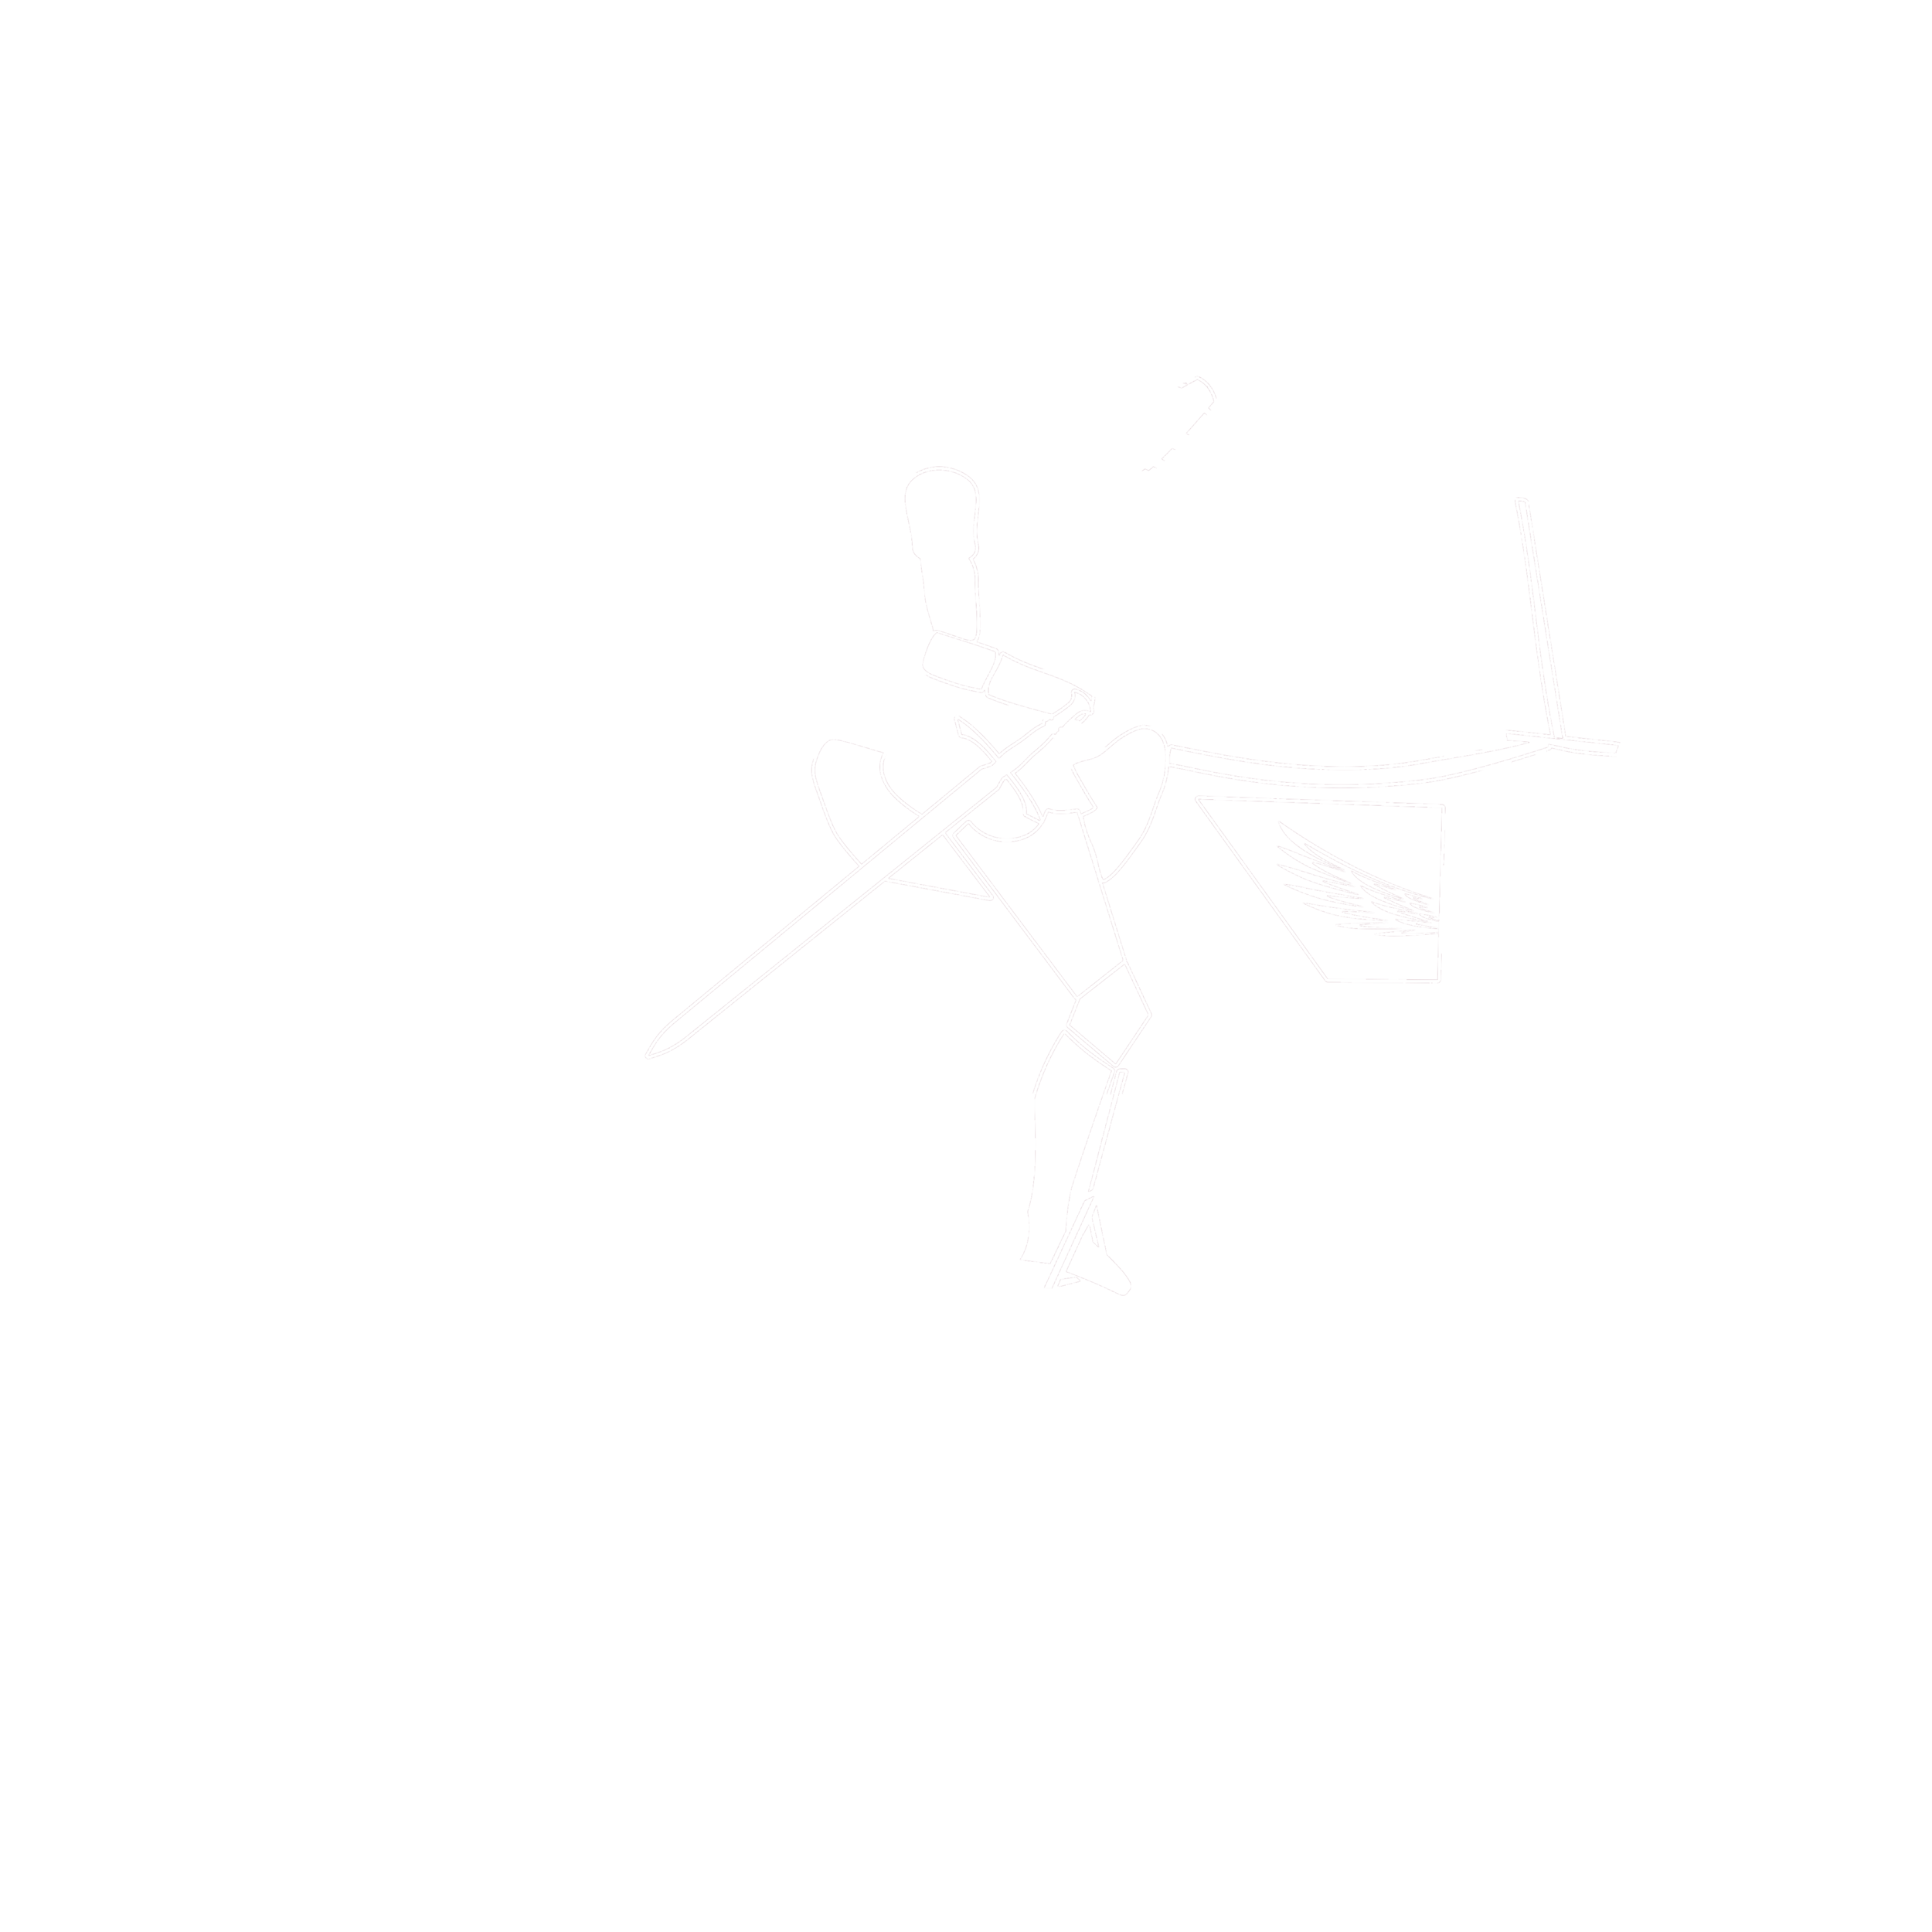 The Exploress